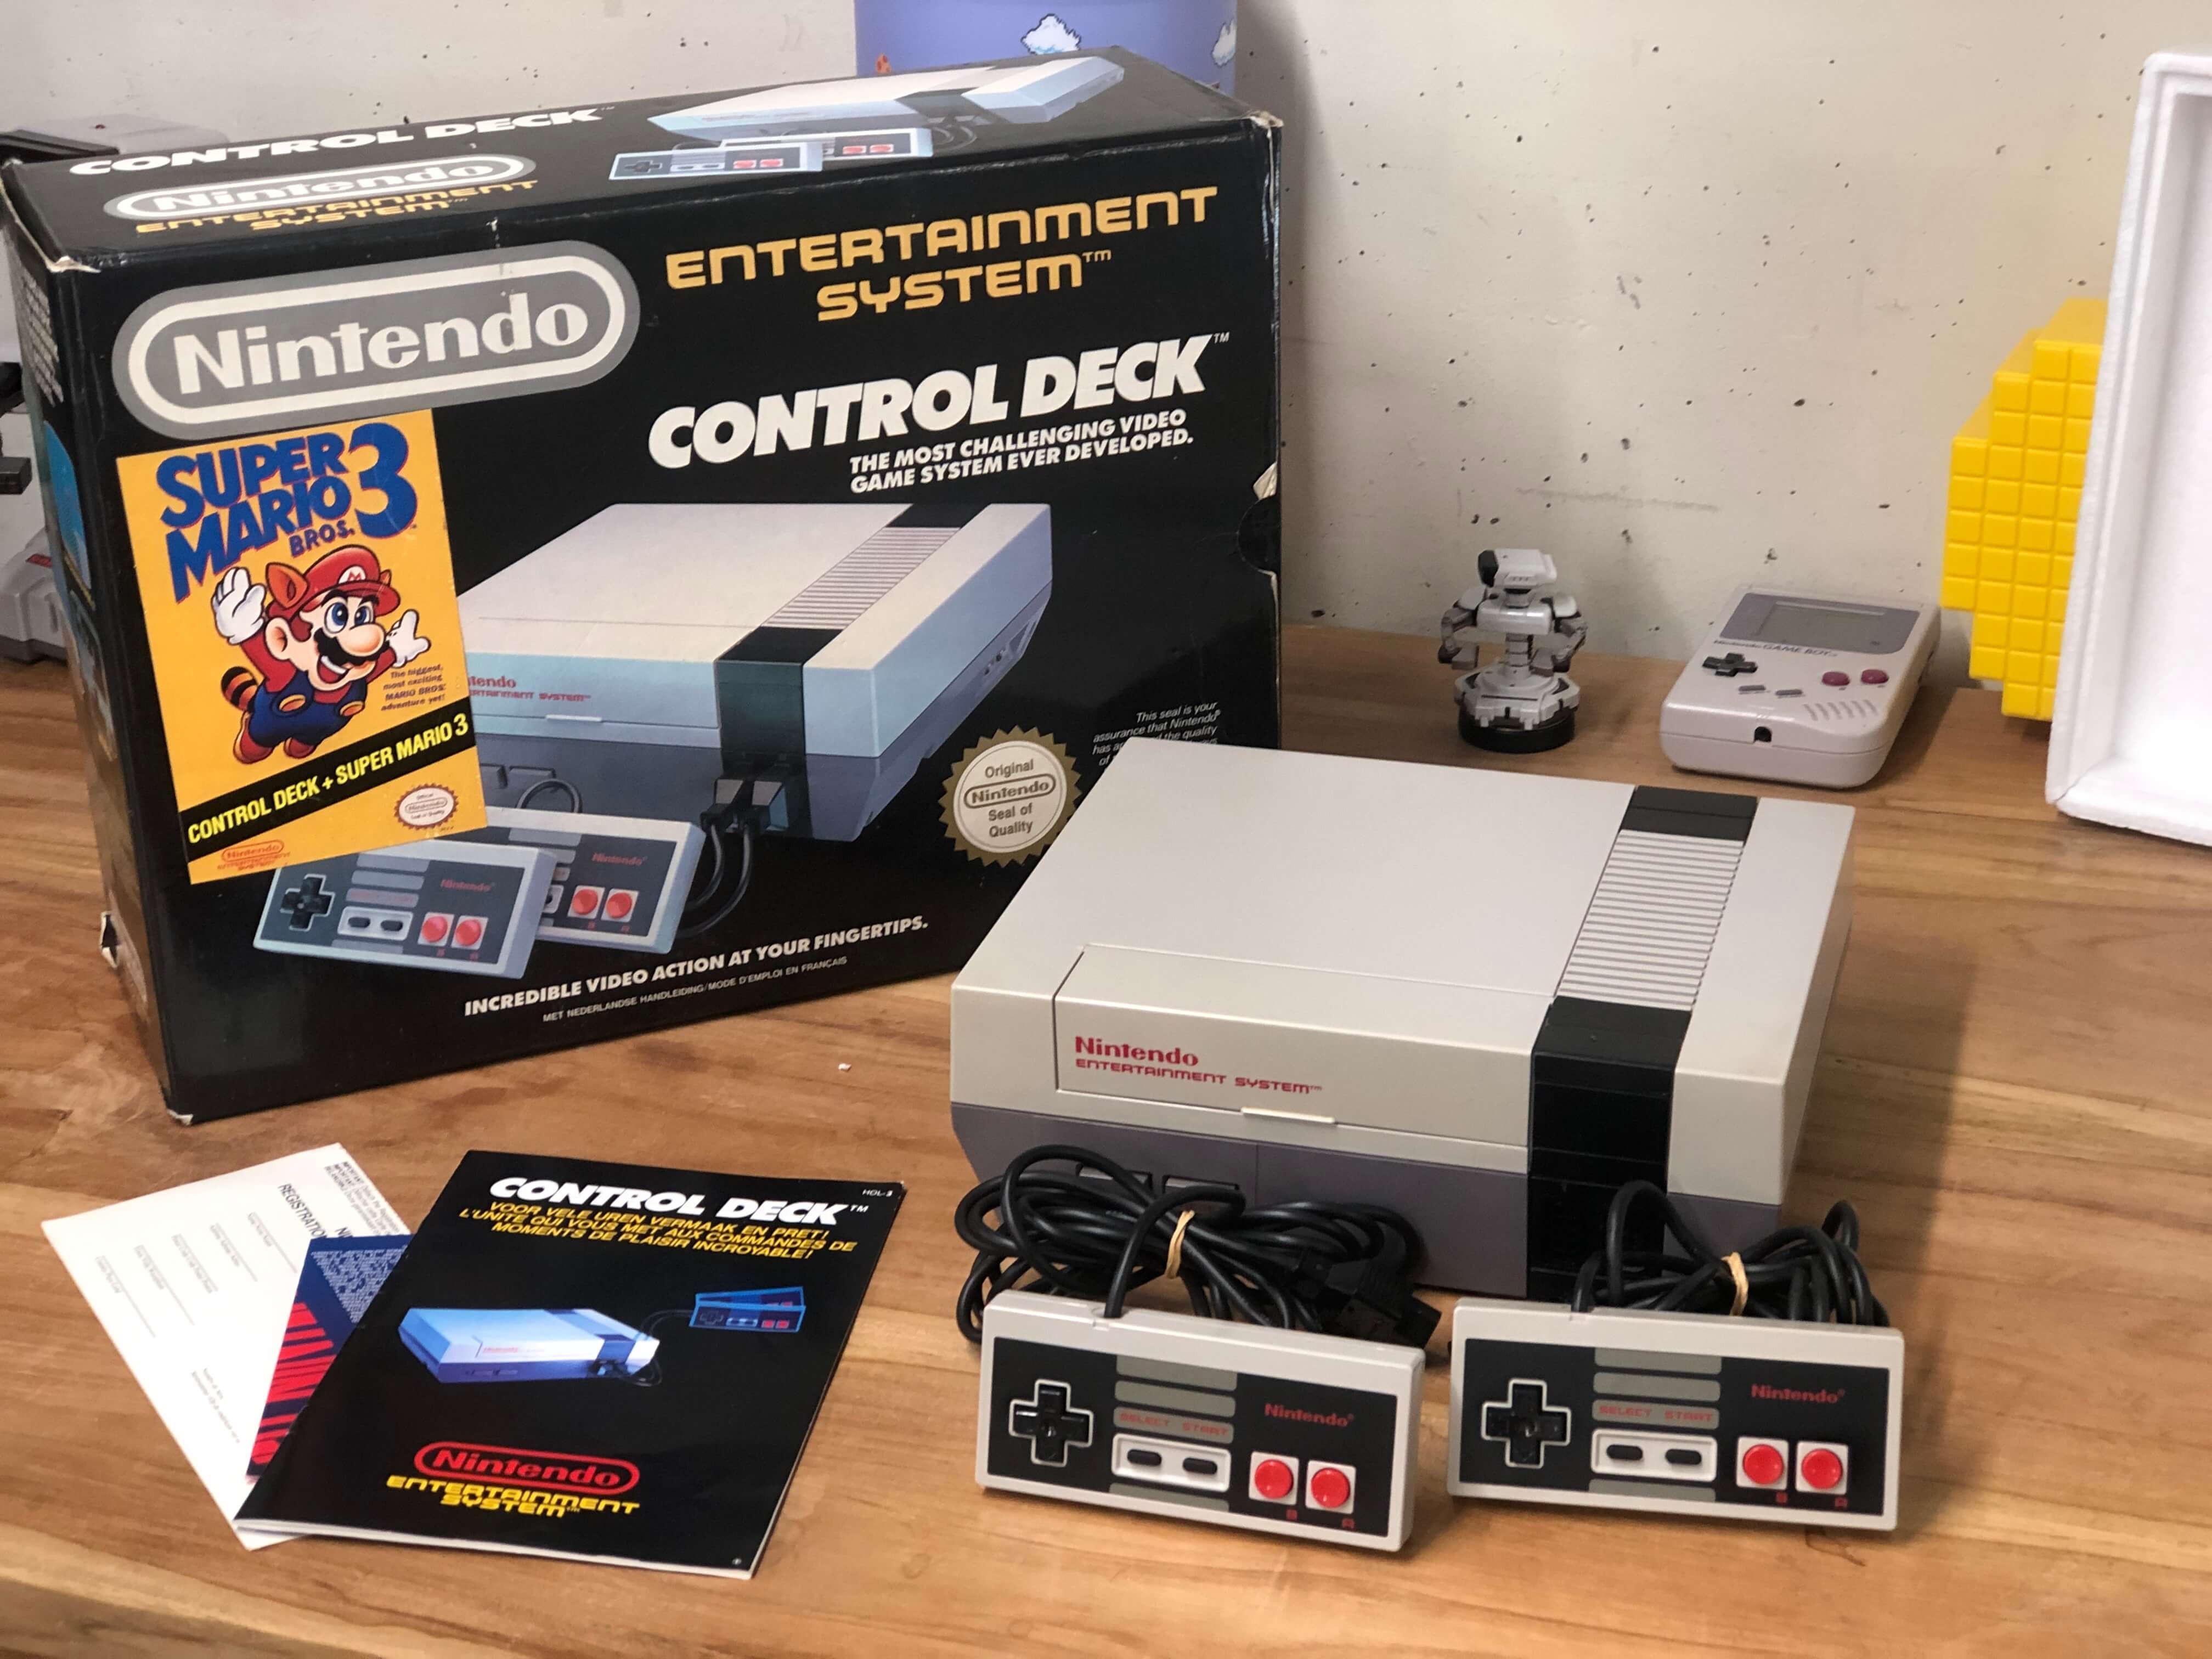 Nintendo NES Starter Pack - Super Mario Bros. 3 Control Deck Edition [Complete] - Nintendo NES Hardware